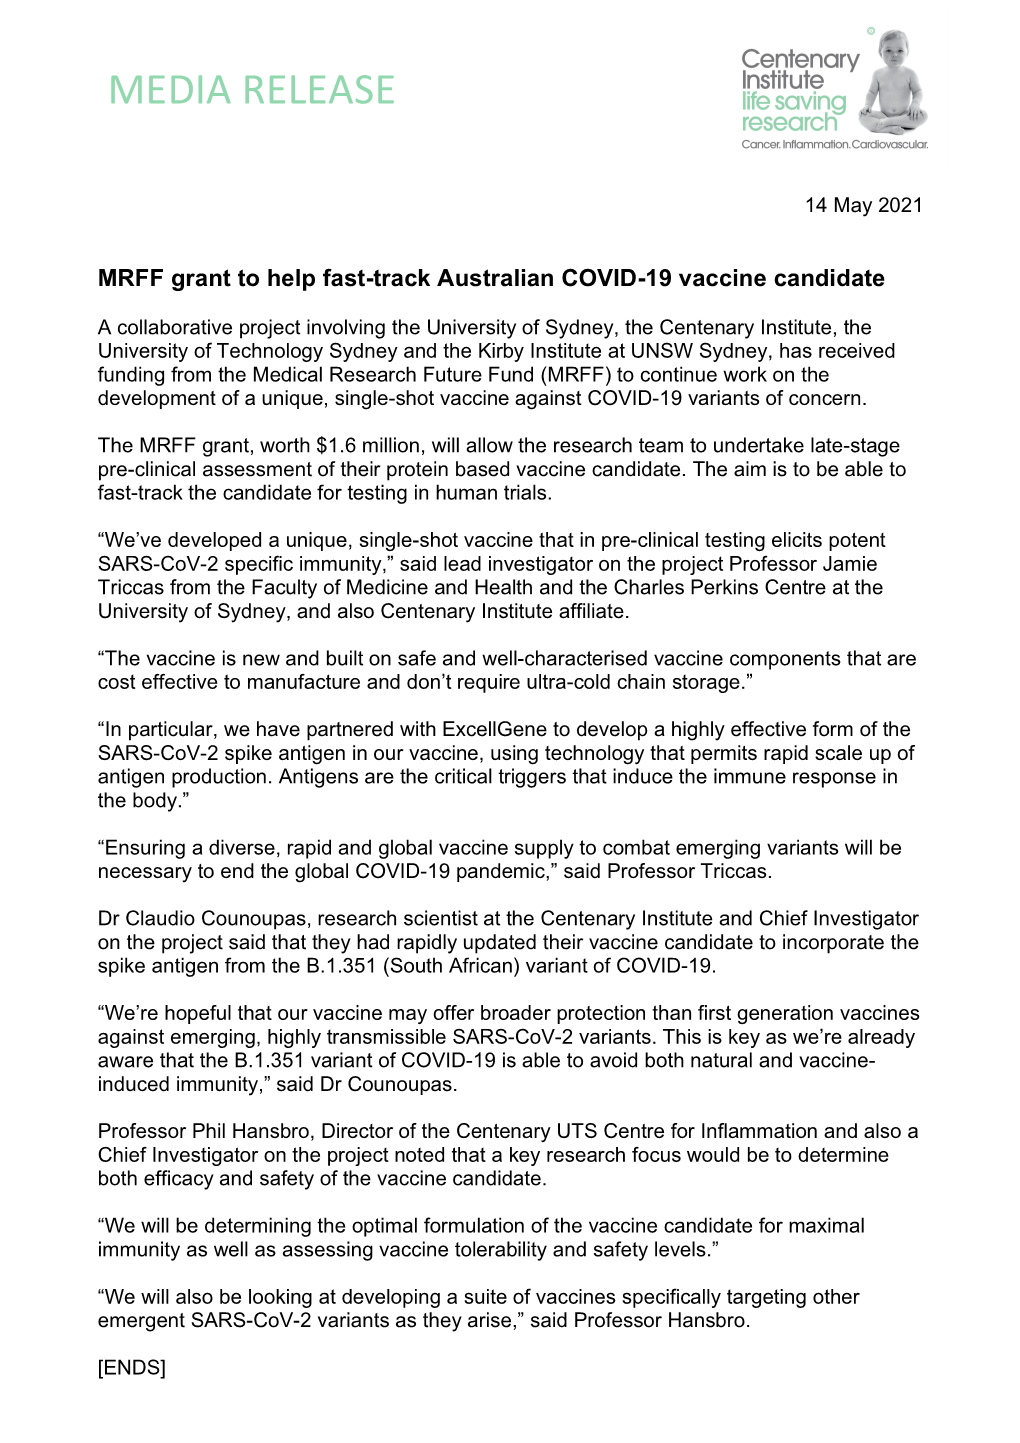 MRFF Grant to Help Fast-Track Australian COVID-19 Vaccine Candidate